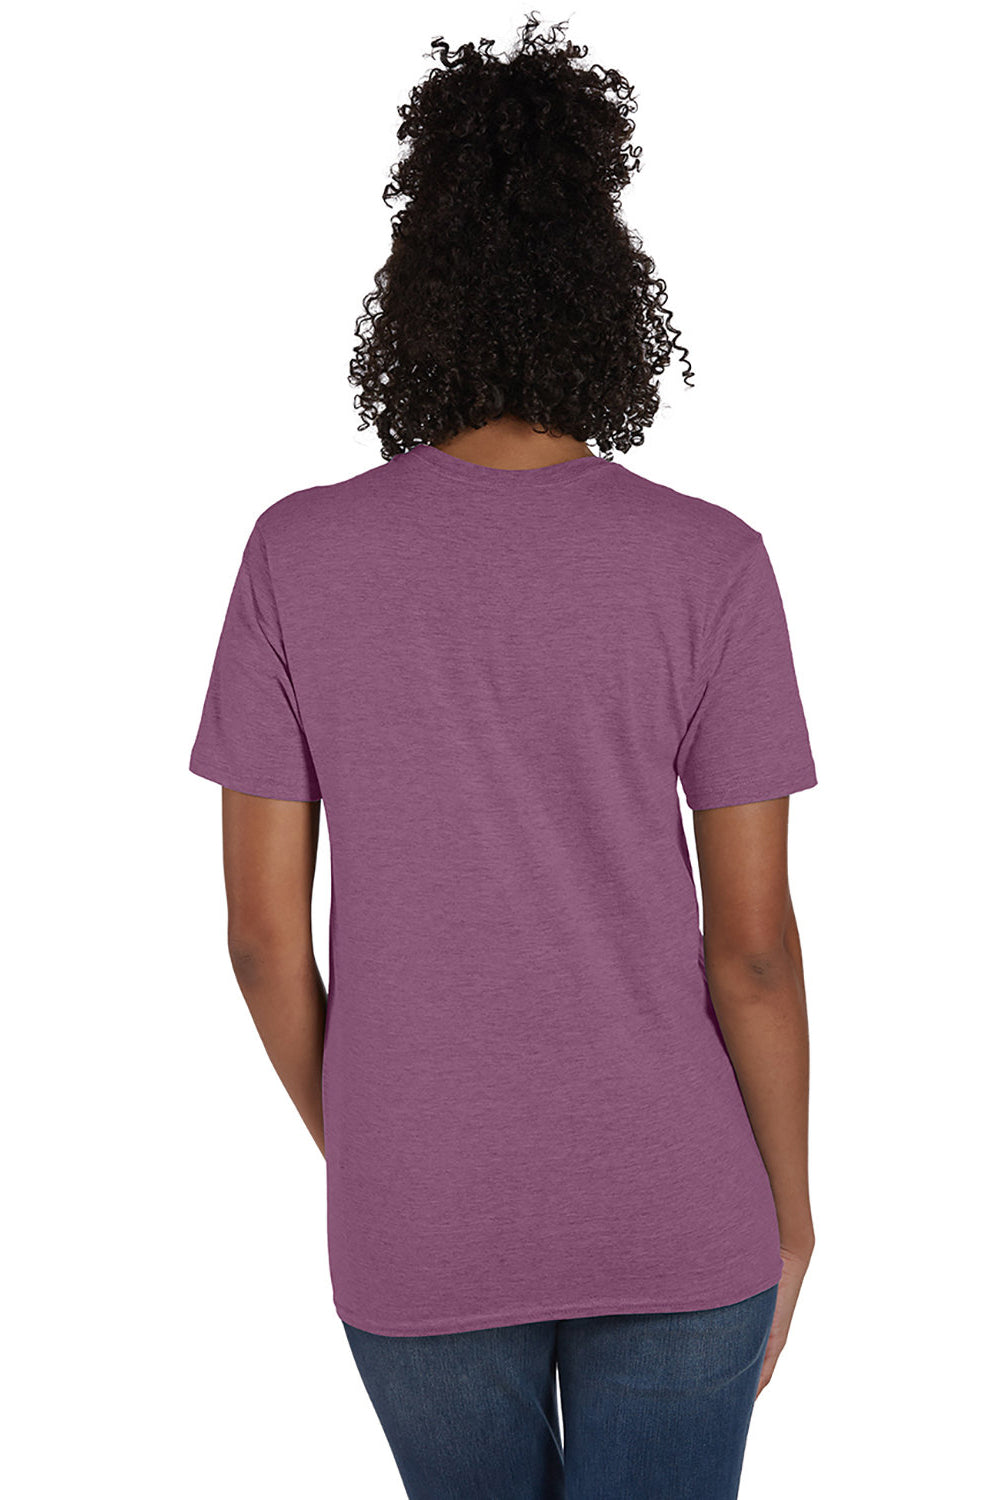 Hanes 4980 Mens Nano-T Short Sleeve Crewneck T-Shirt Heather Purple Rain Back